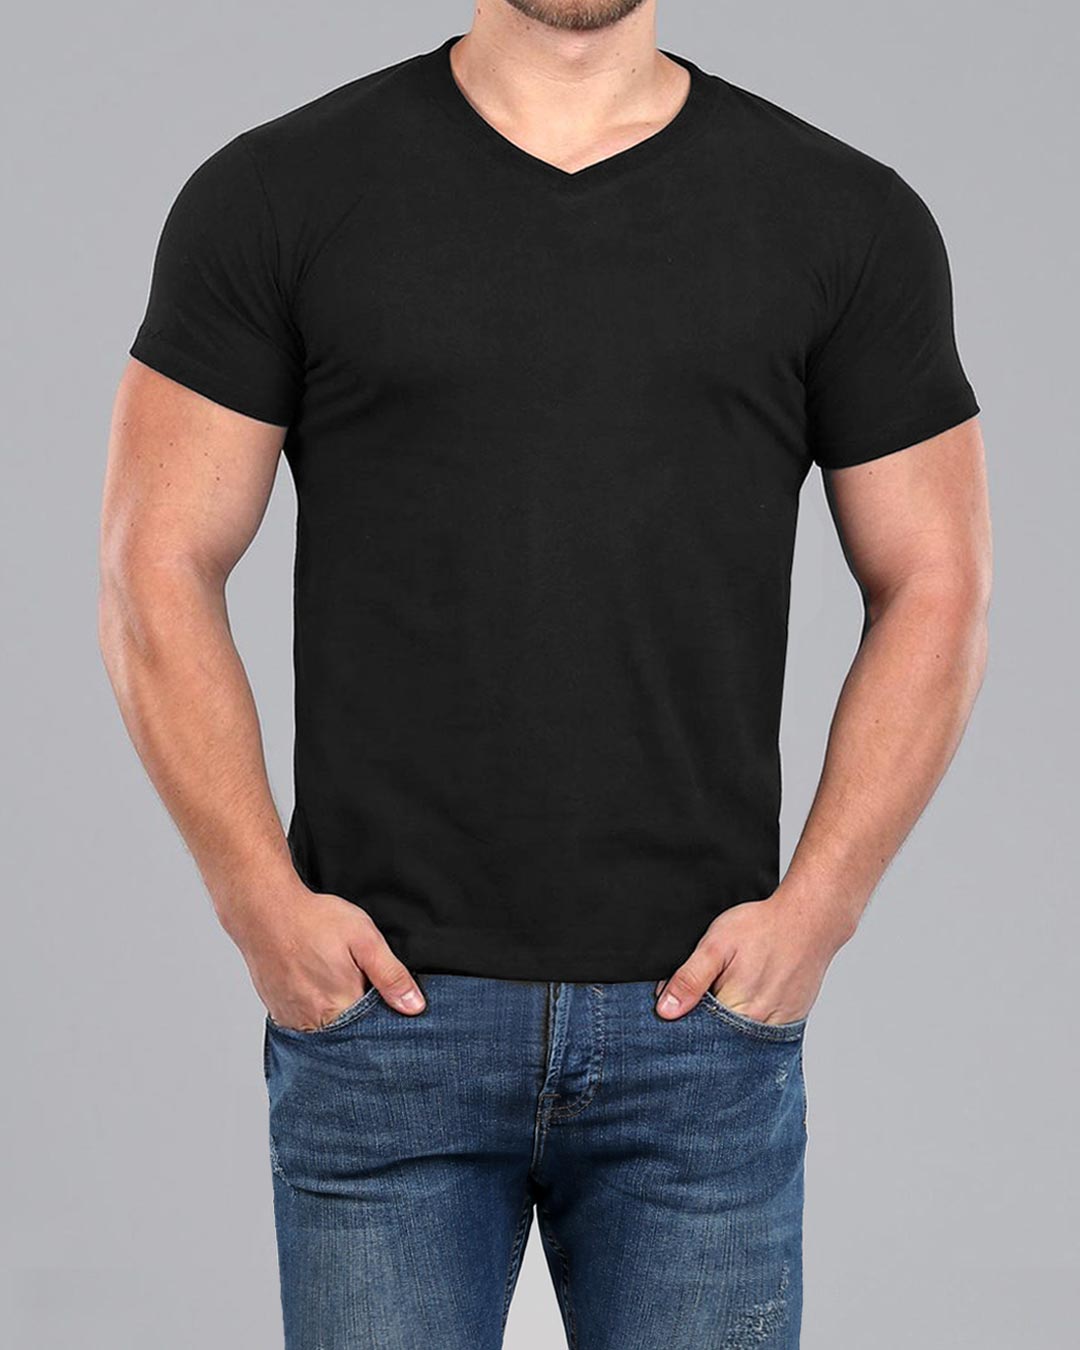 V-Neck Basic Muscle Fitted Plain T-Shirt - Black